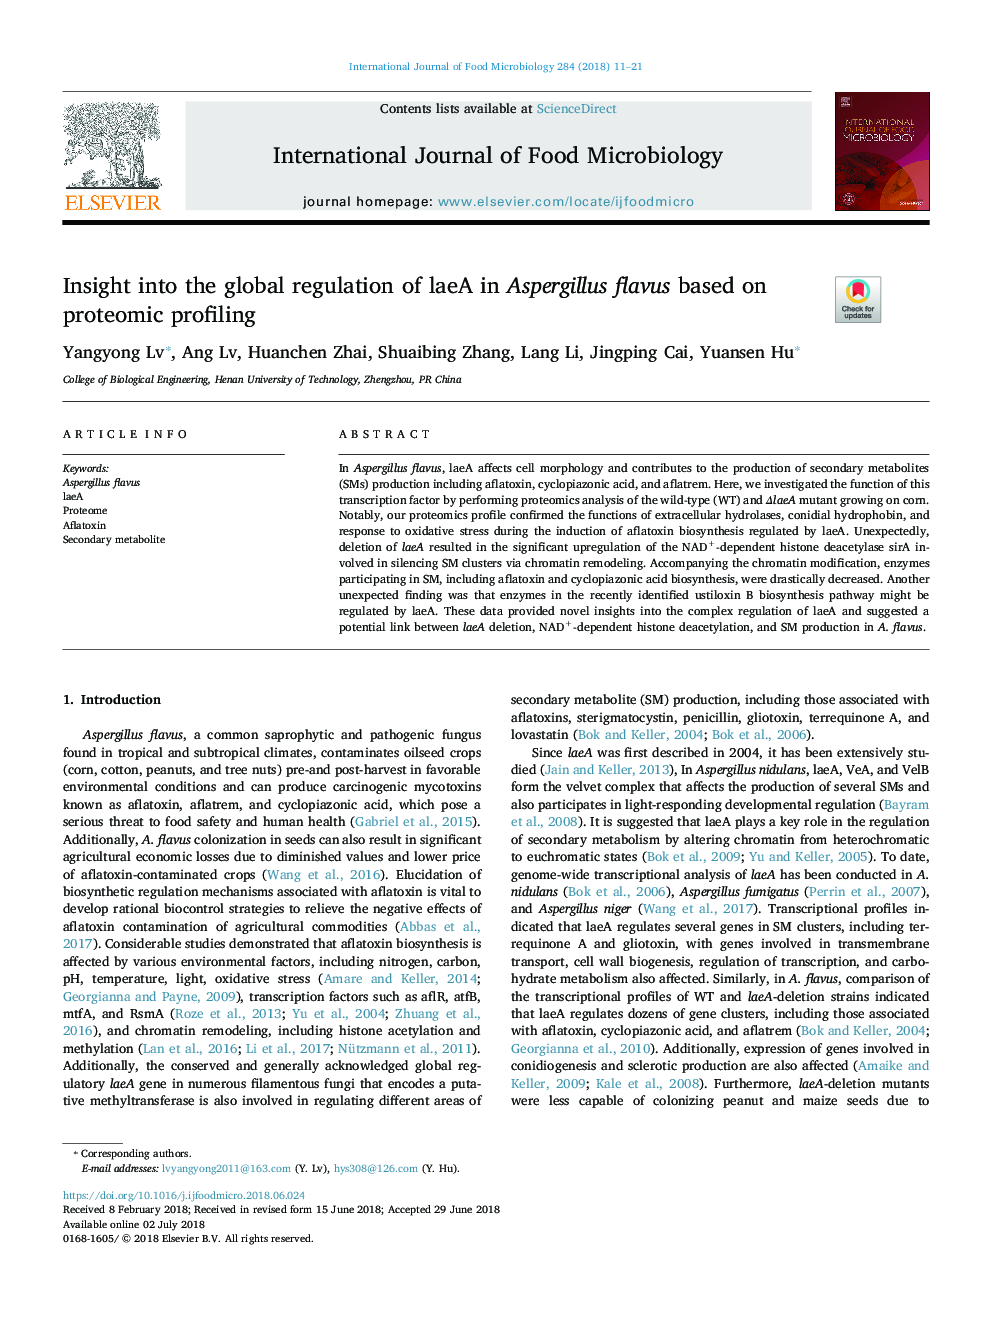 Insight into the global regulation of laeA in Aspergillus flavus based on proteomic profiling